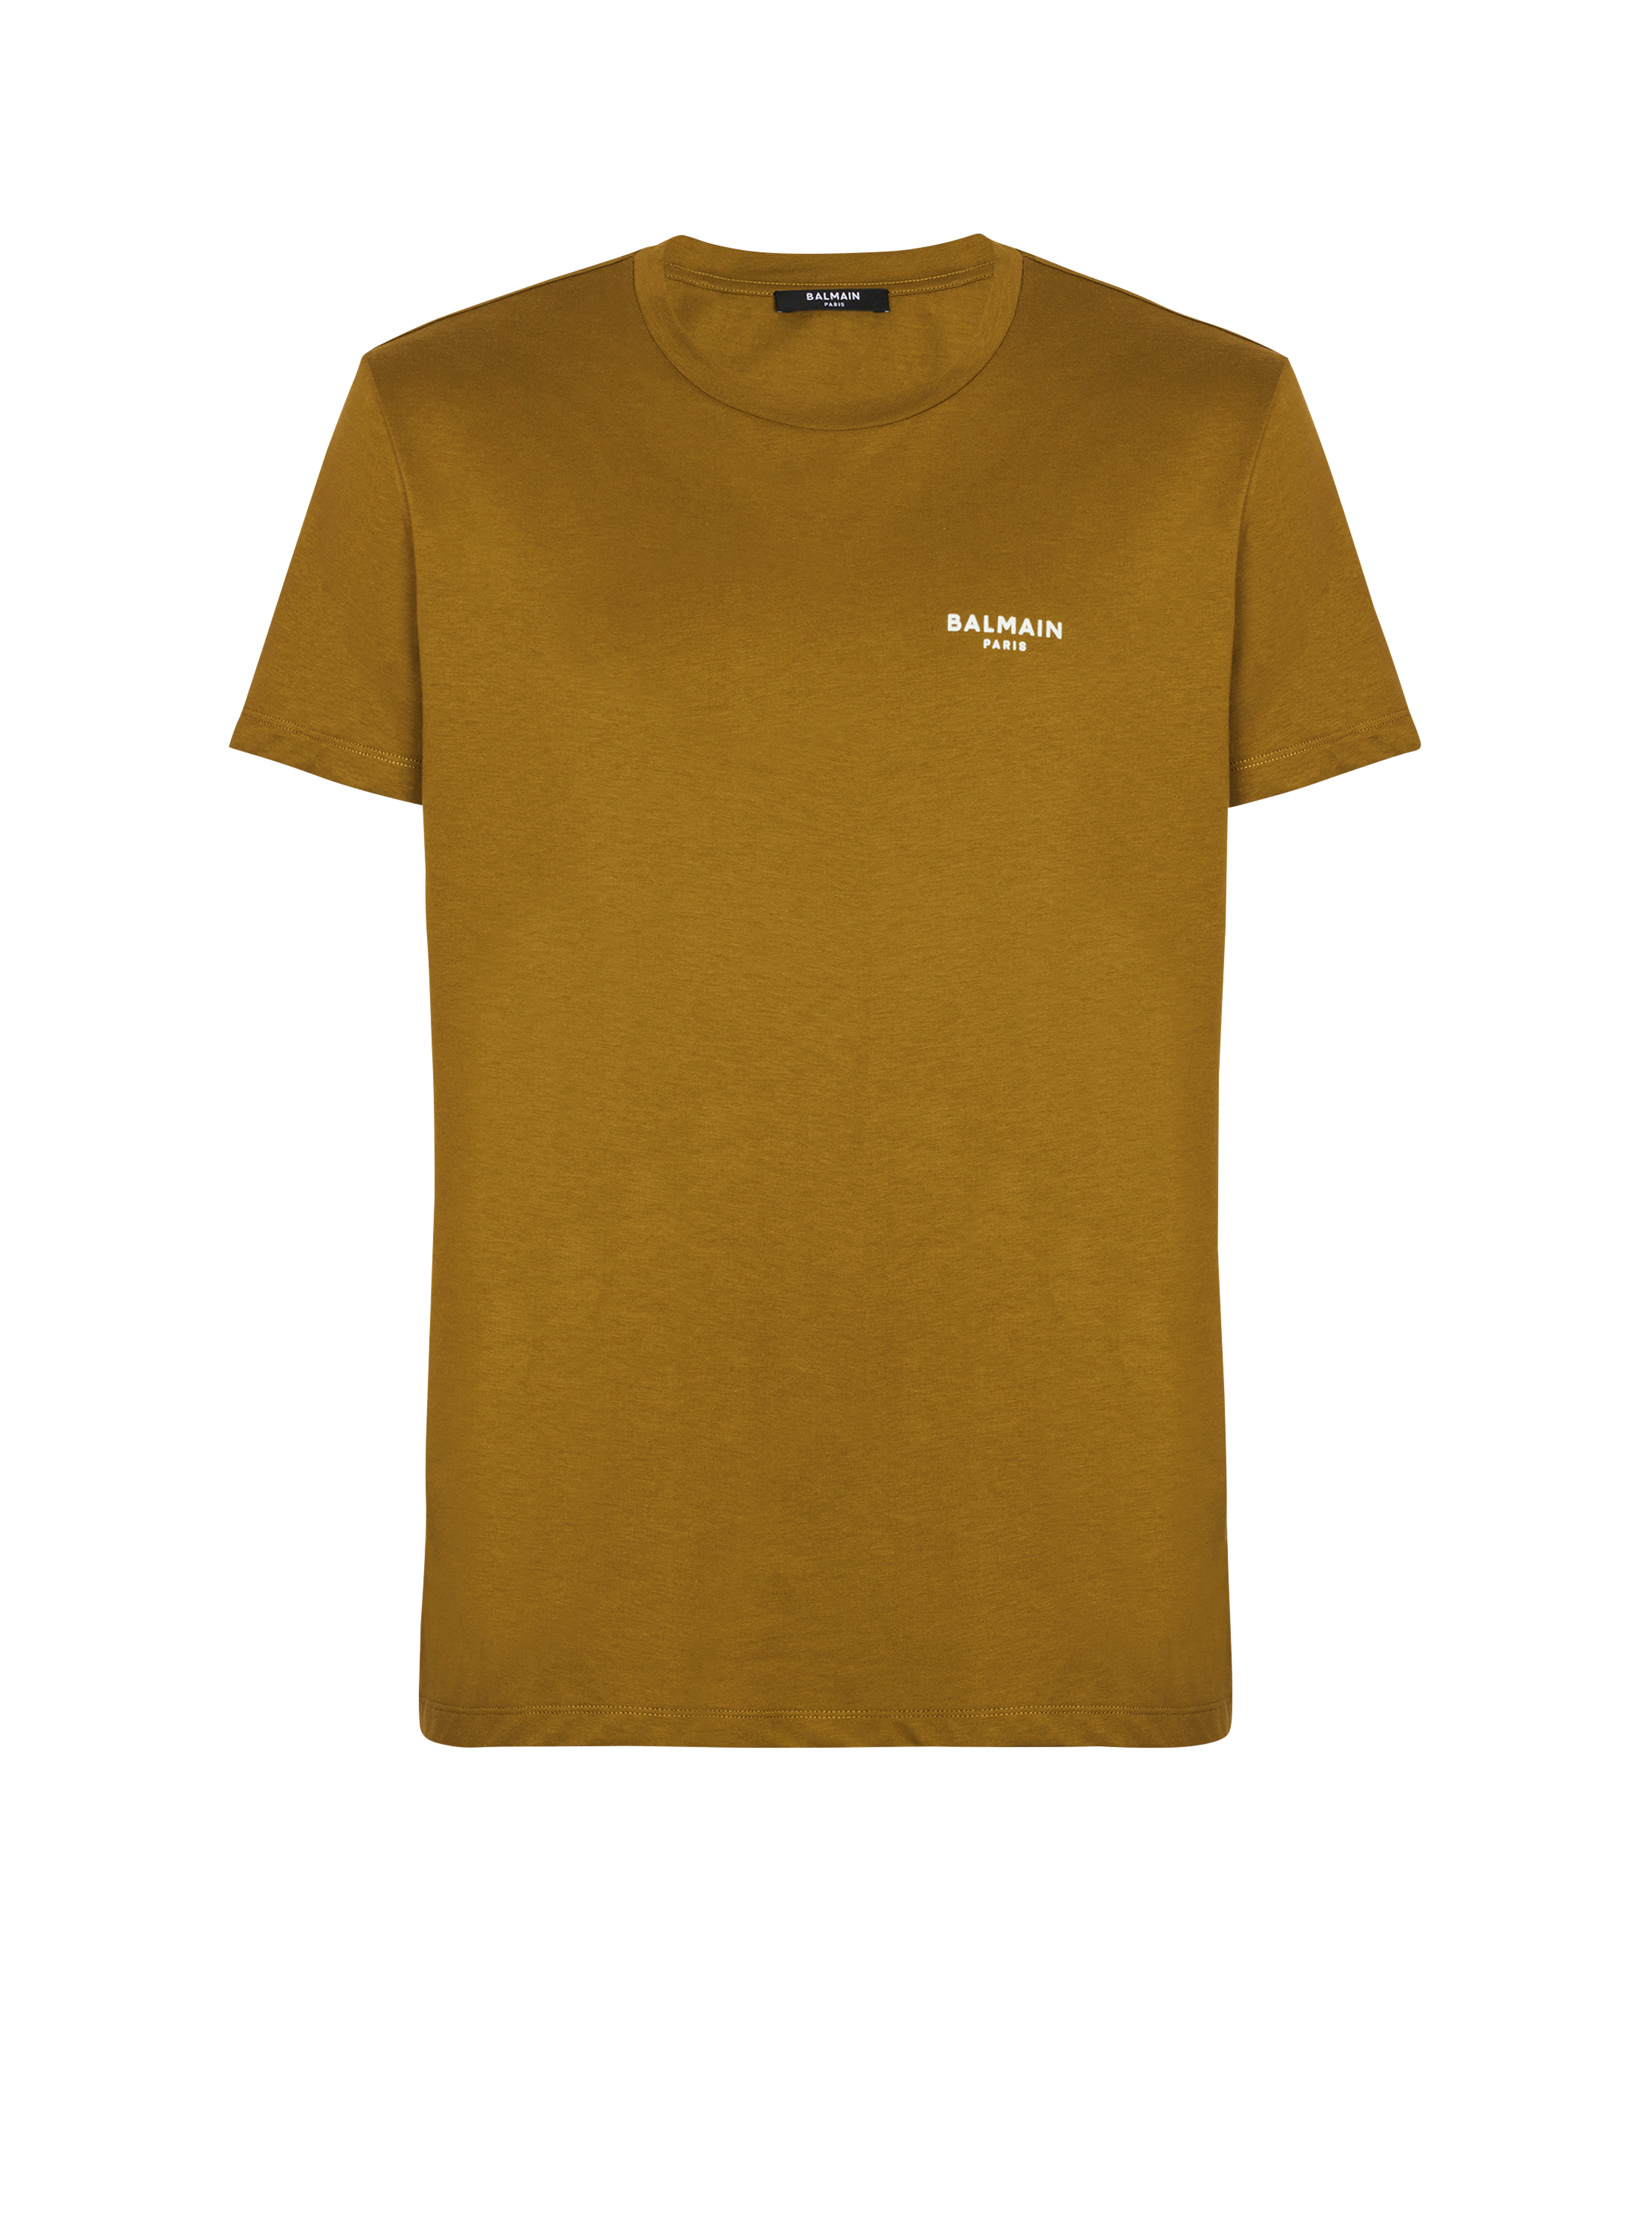 Eco-responsible cotton T-shirt with Balmain logo print, 